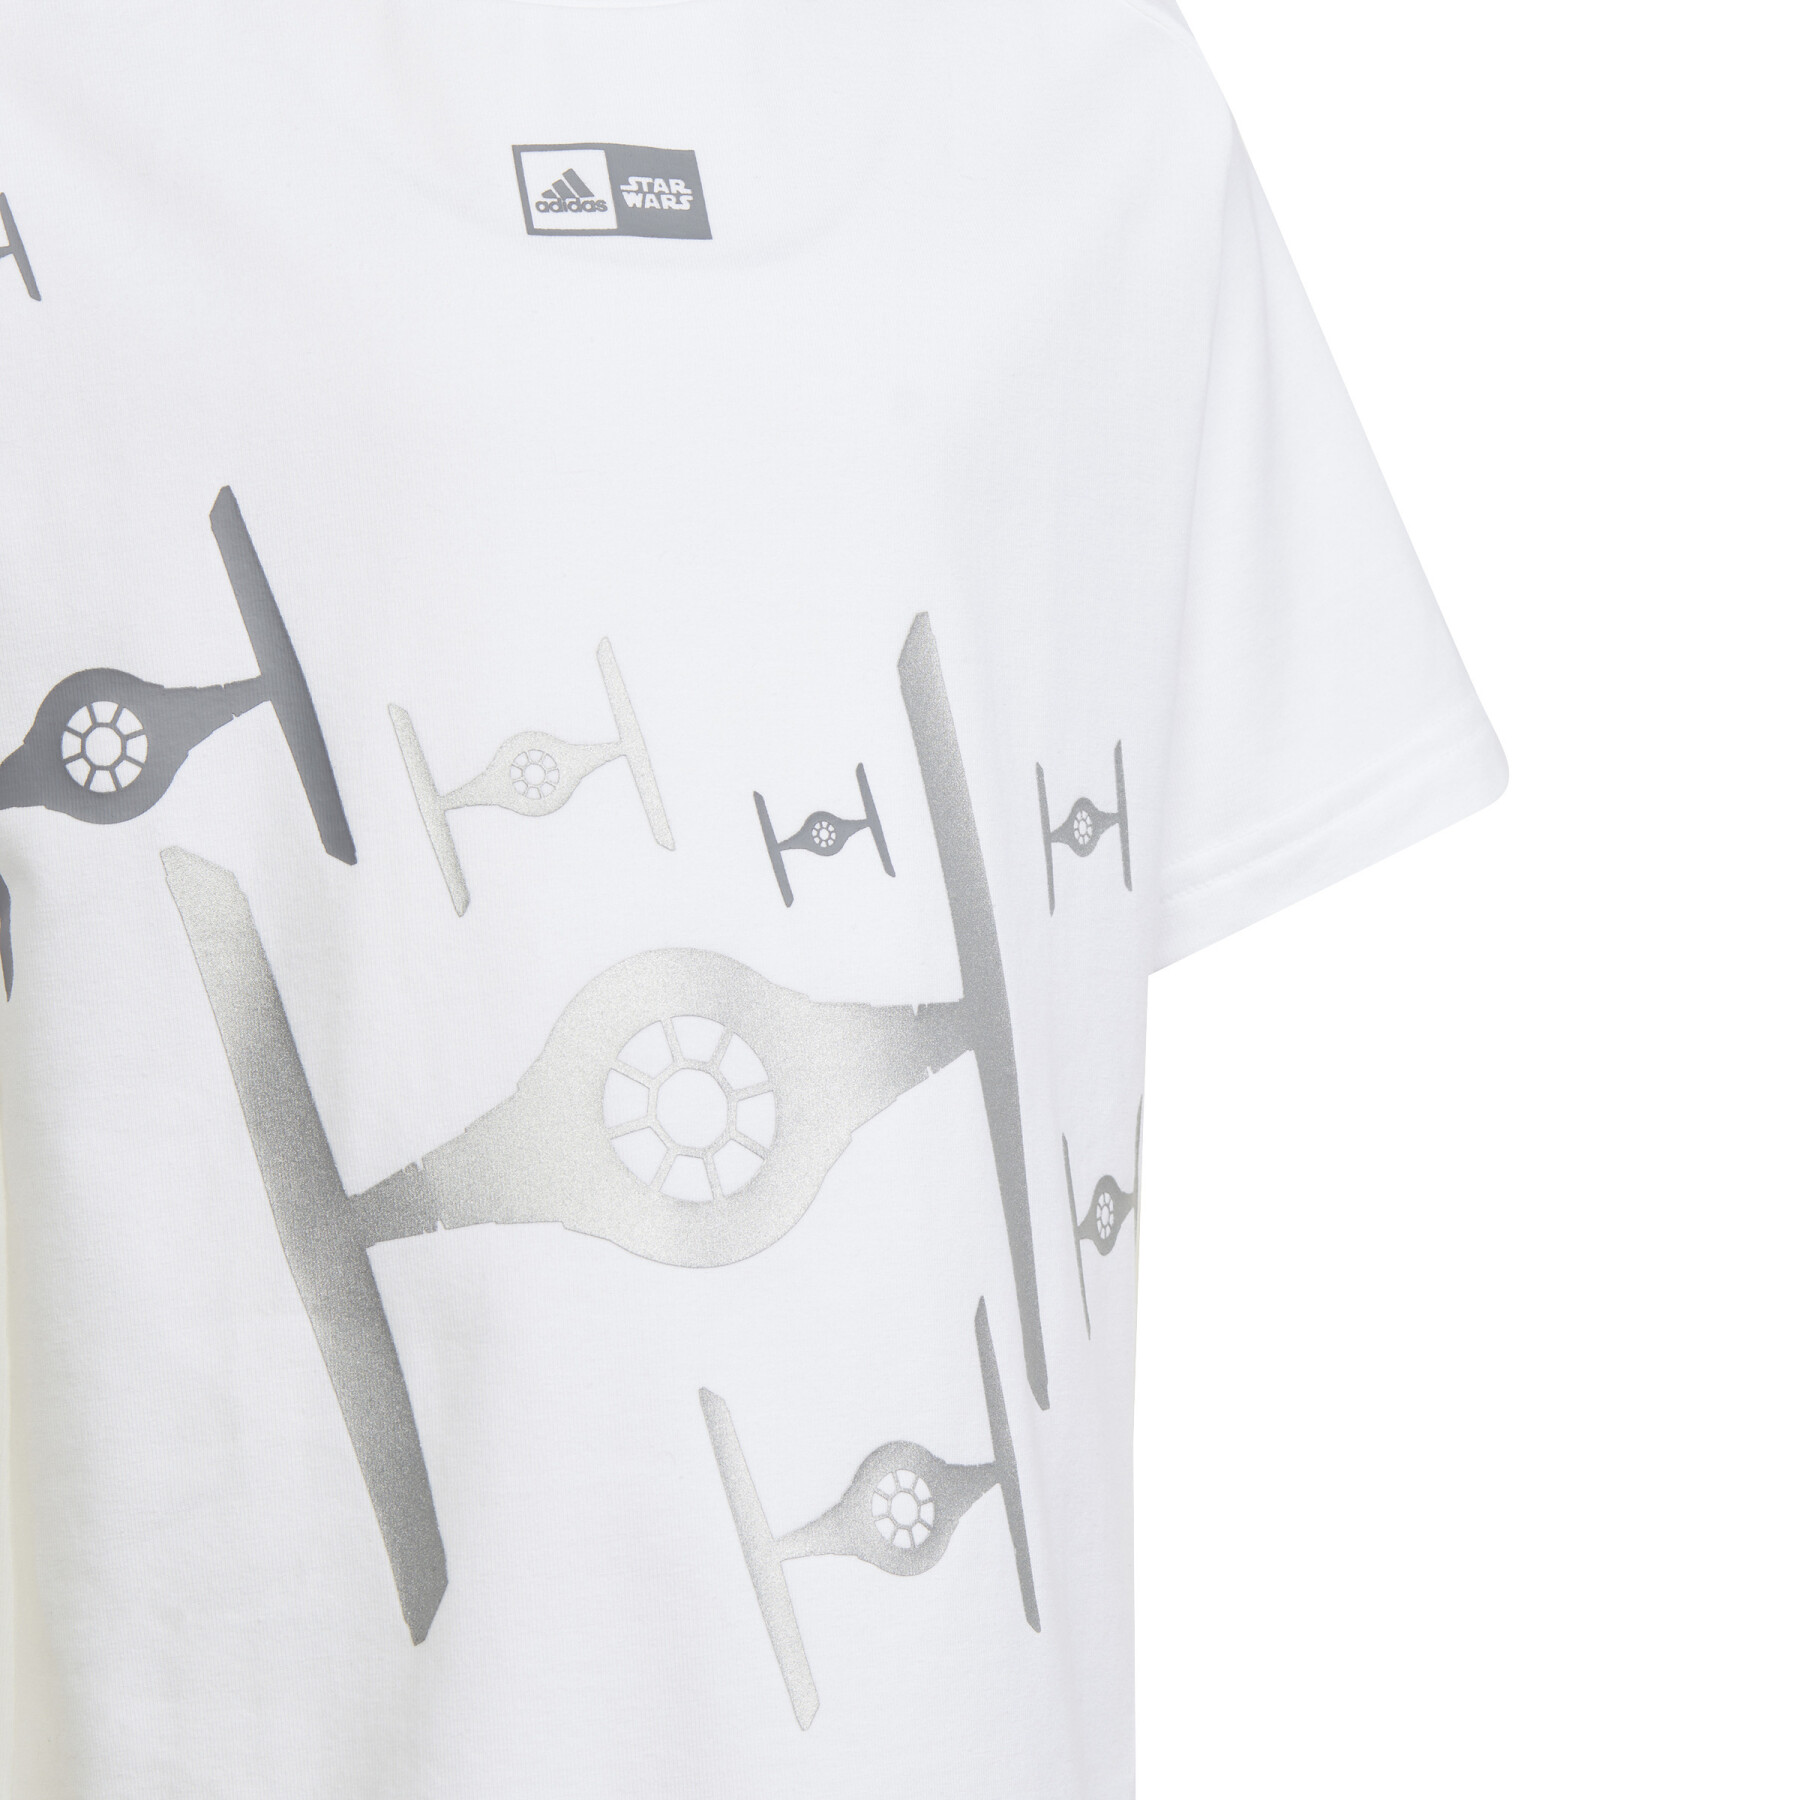 T-shirt per bambini Adidas Star Wars Z.N.E